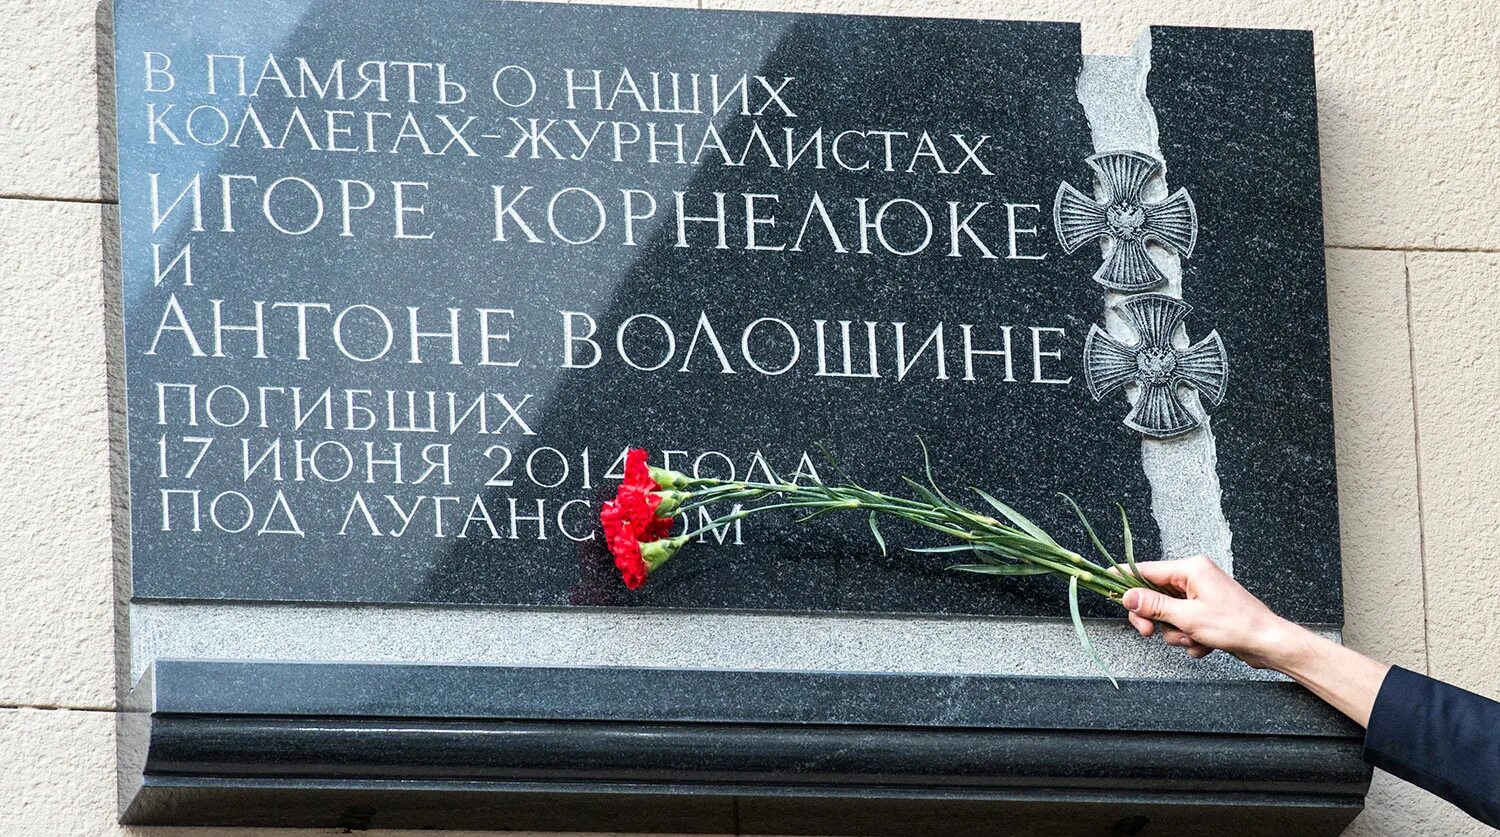 3 июня 2014 г. Доска памяти журналистам Корнелюку и Волошин. Мемориальная доска памяти. Мемориальные доски погибшим на Украине.